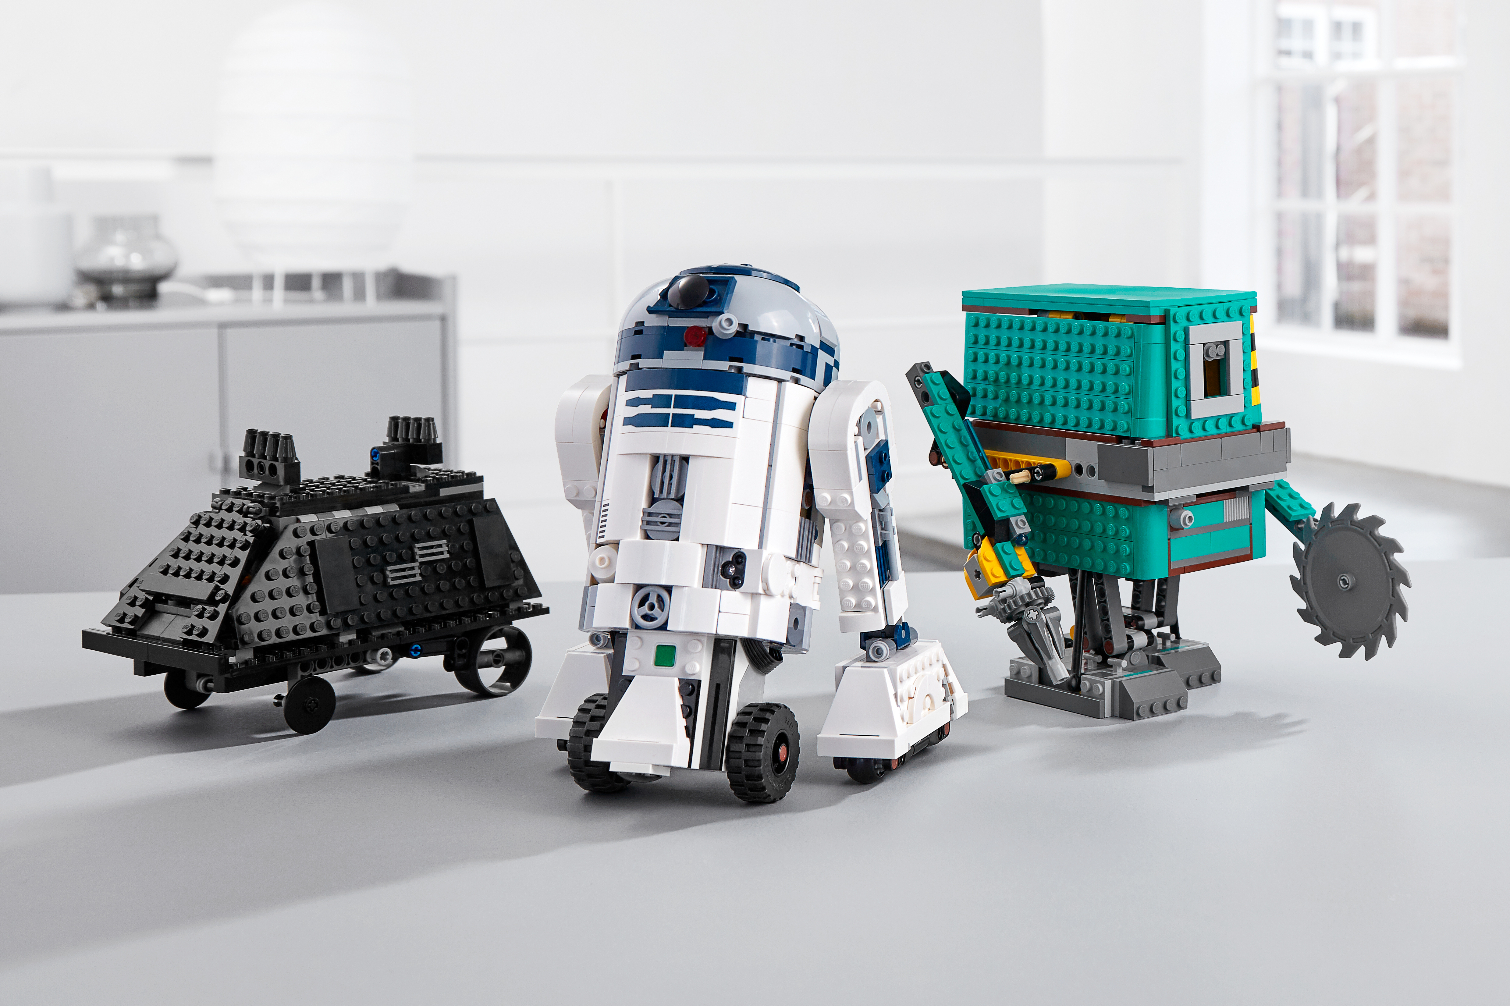 Details about   MOC Star Wars R2-D2 Robot Model Building Blocks Bricks Children Educational Toys 